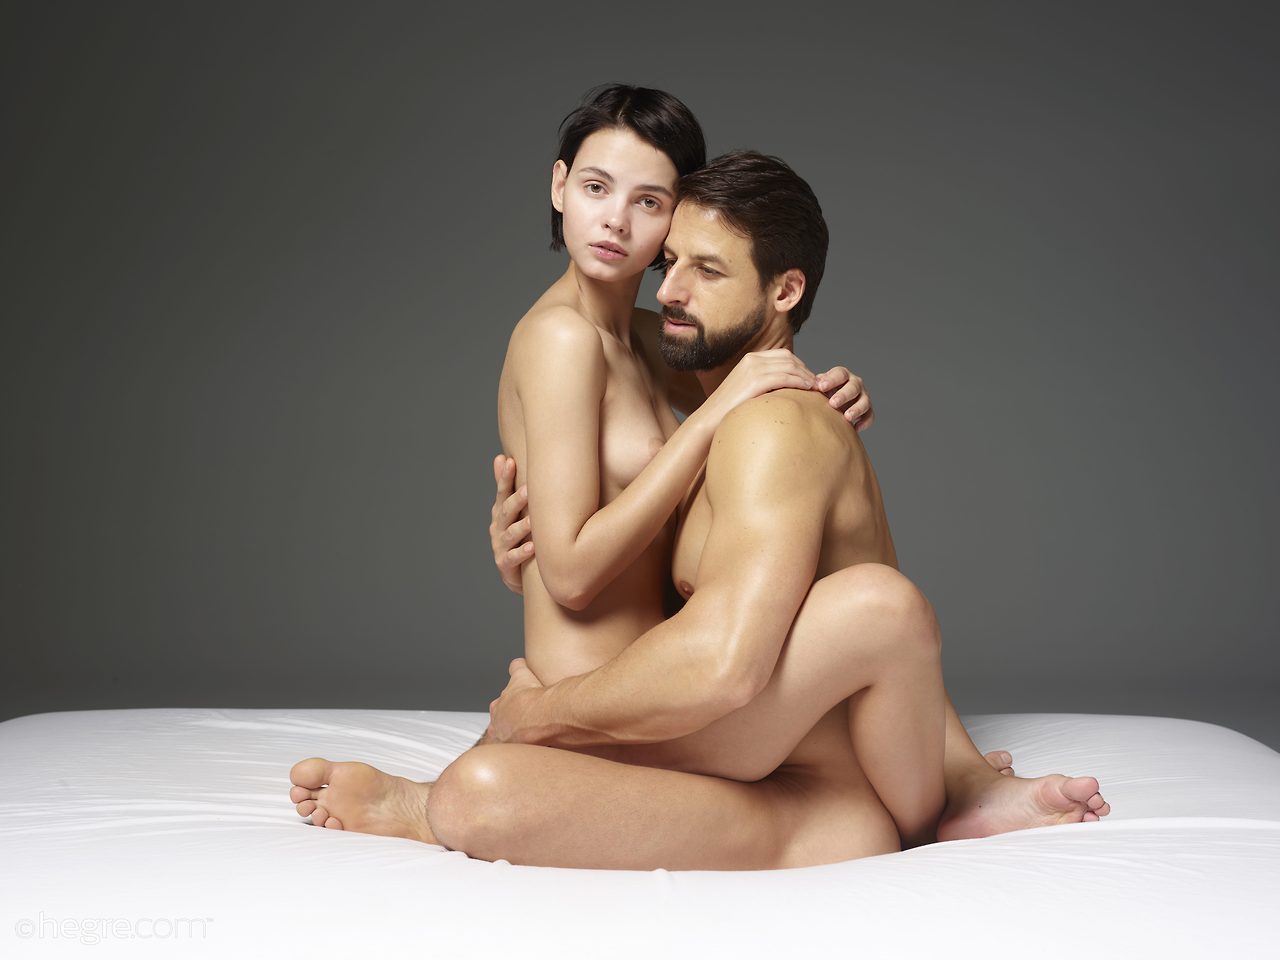 Naked pics of men and women 🔥 Фото Эротика Женщины И Мужчины